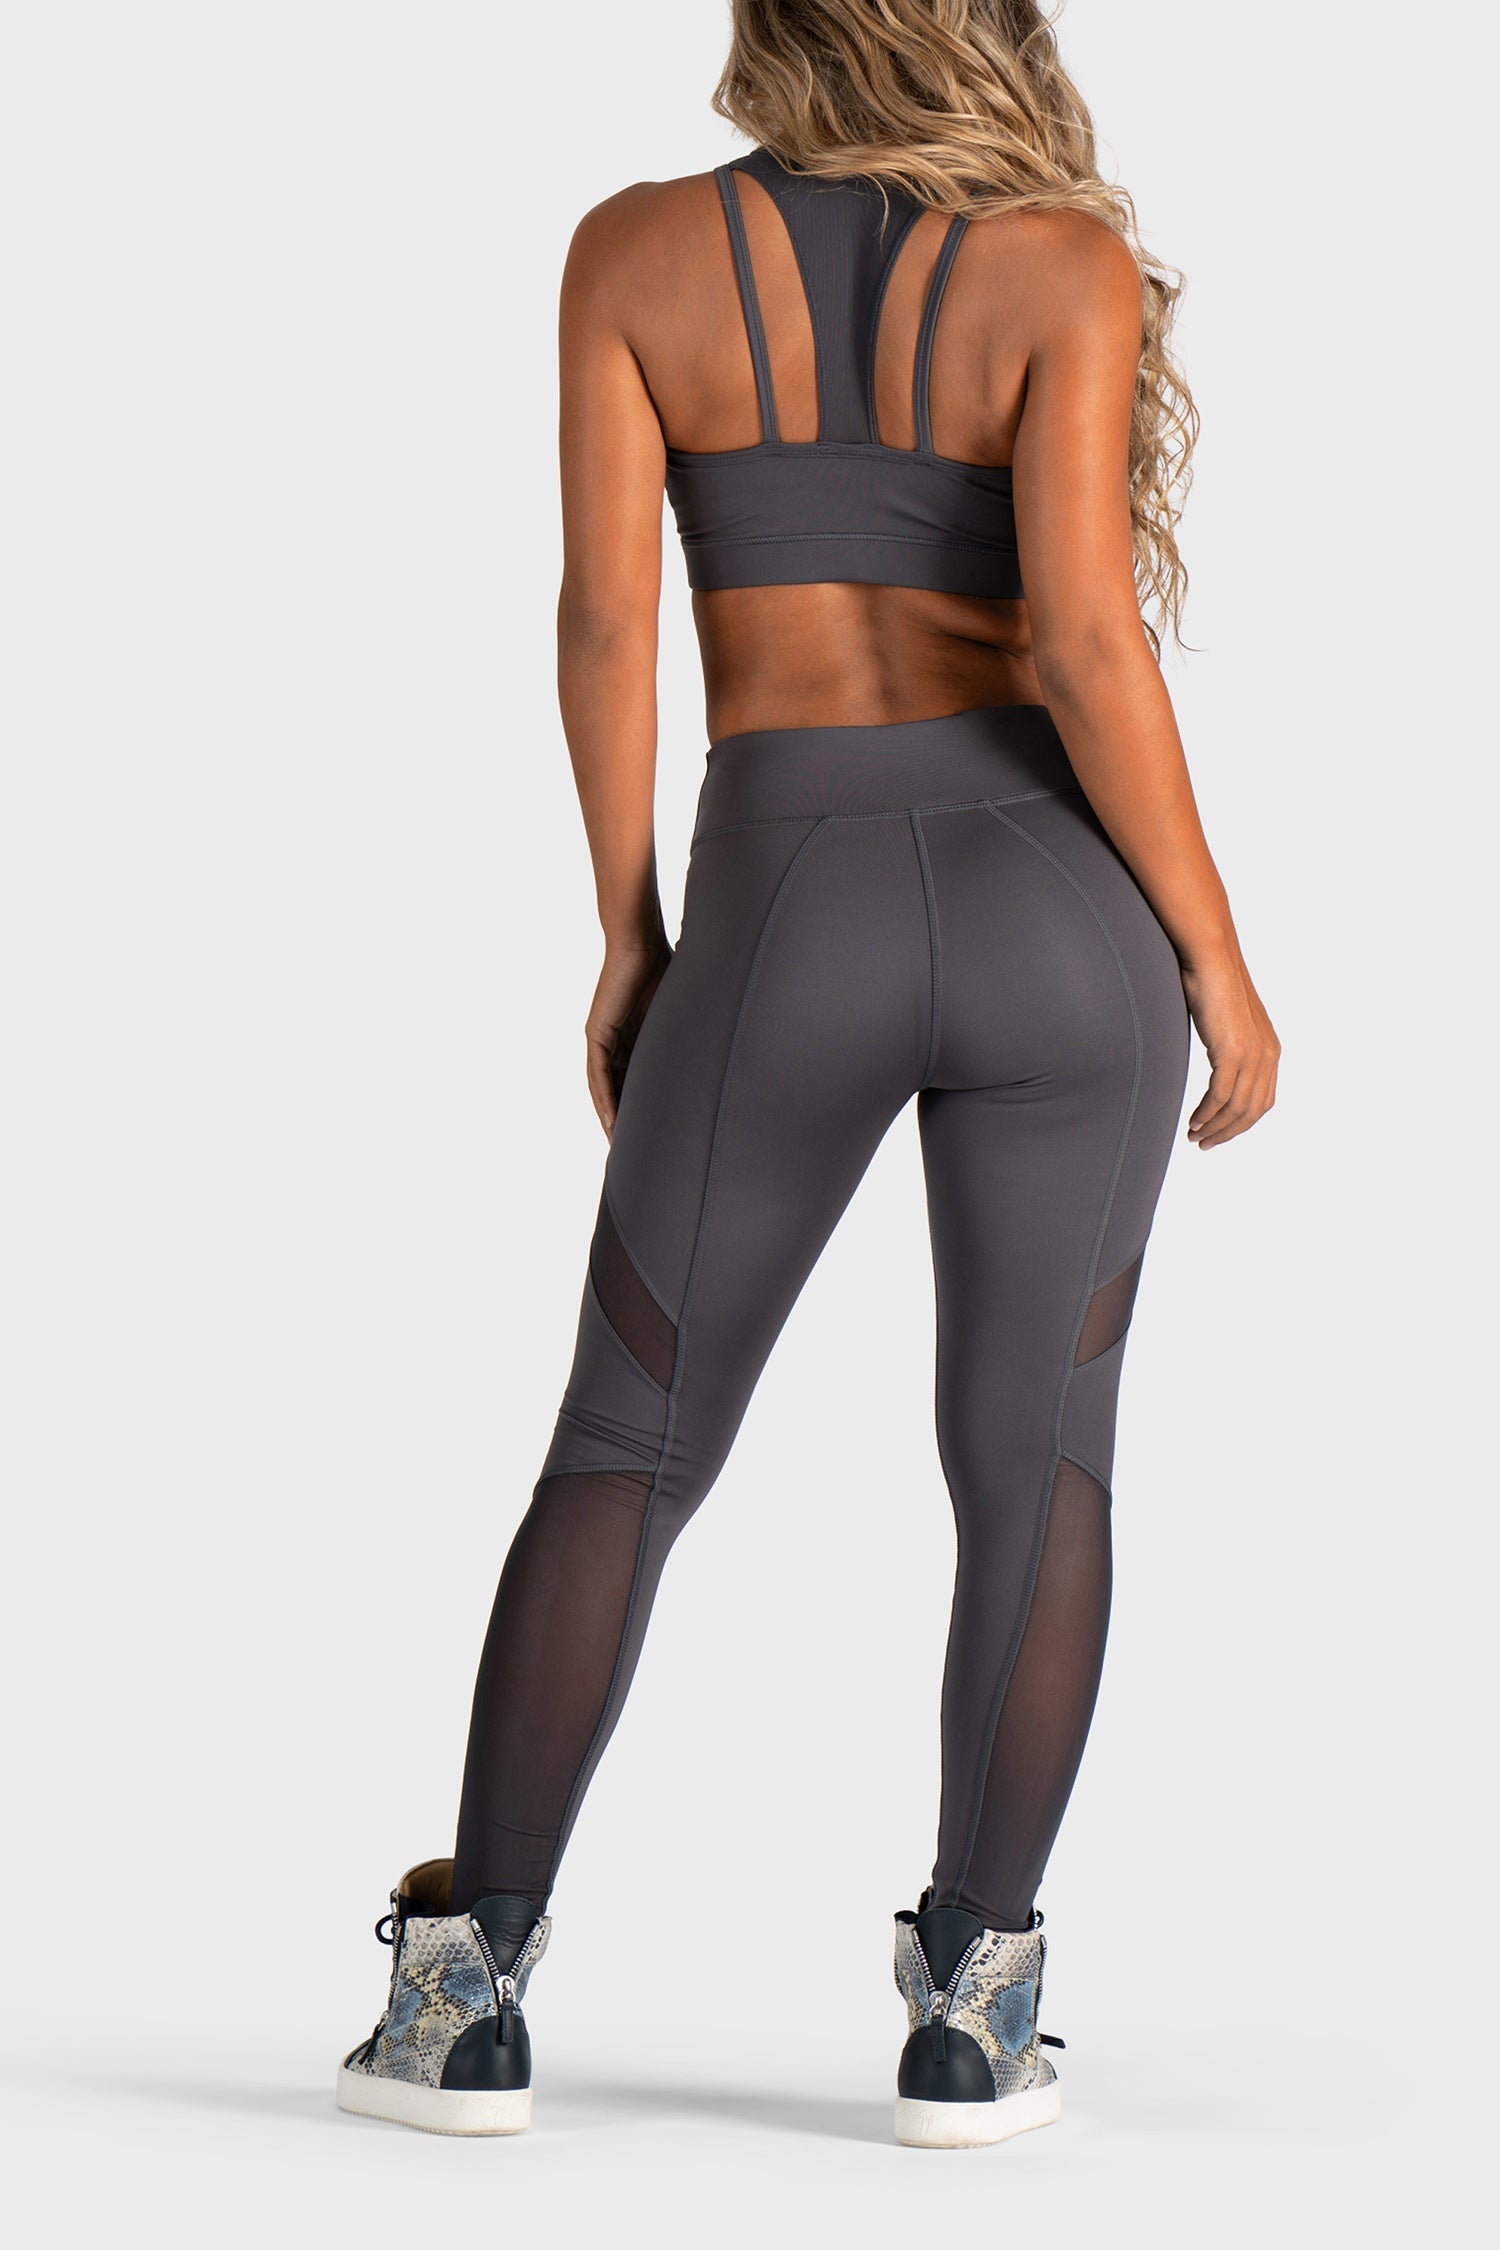 Black Yoga Set For Women W/ Sports Bra & Fitted Mesh Cropped Yoga Pants 